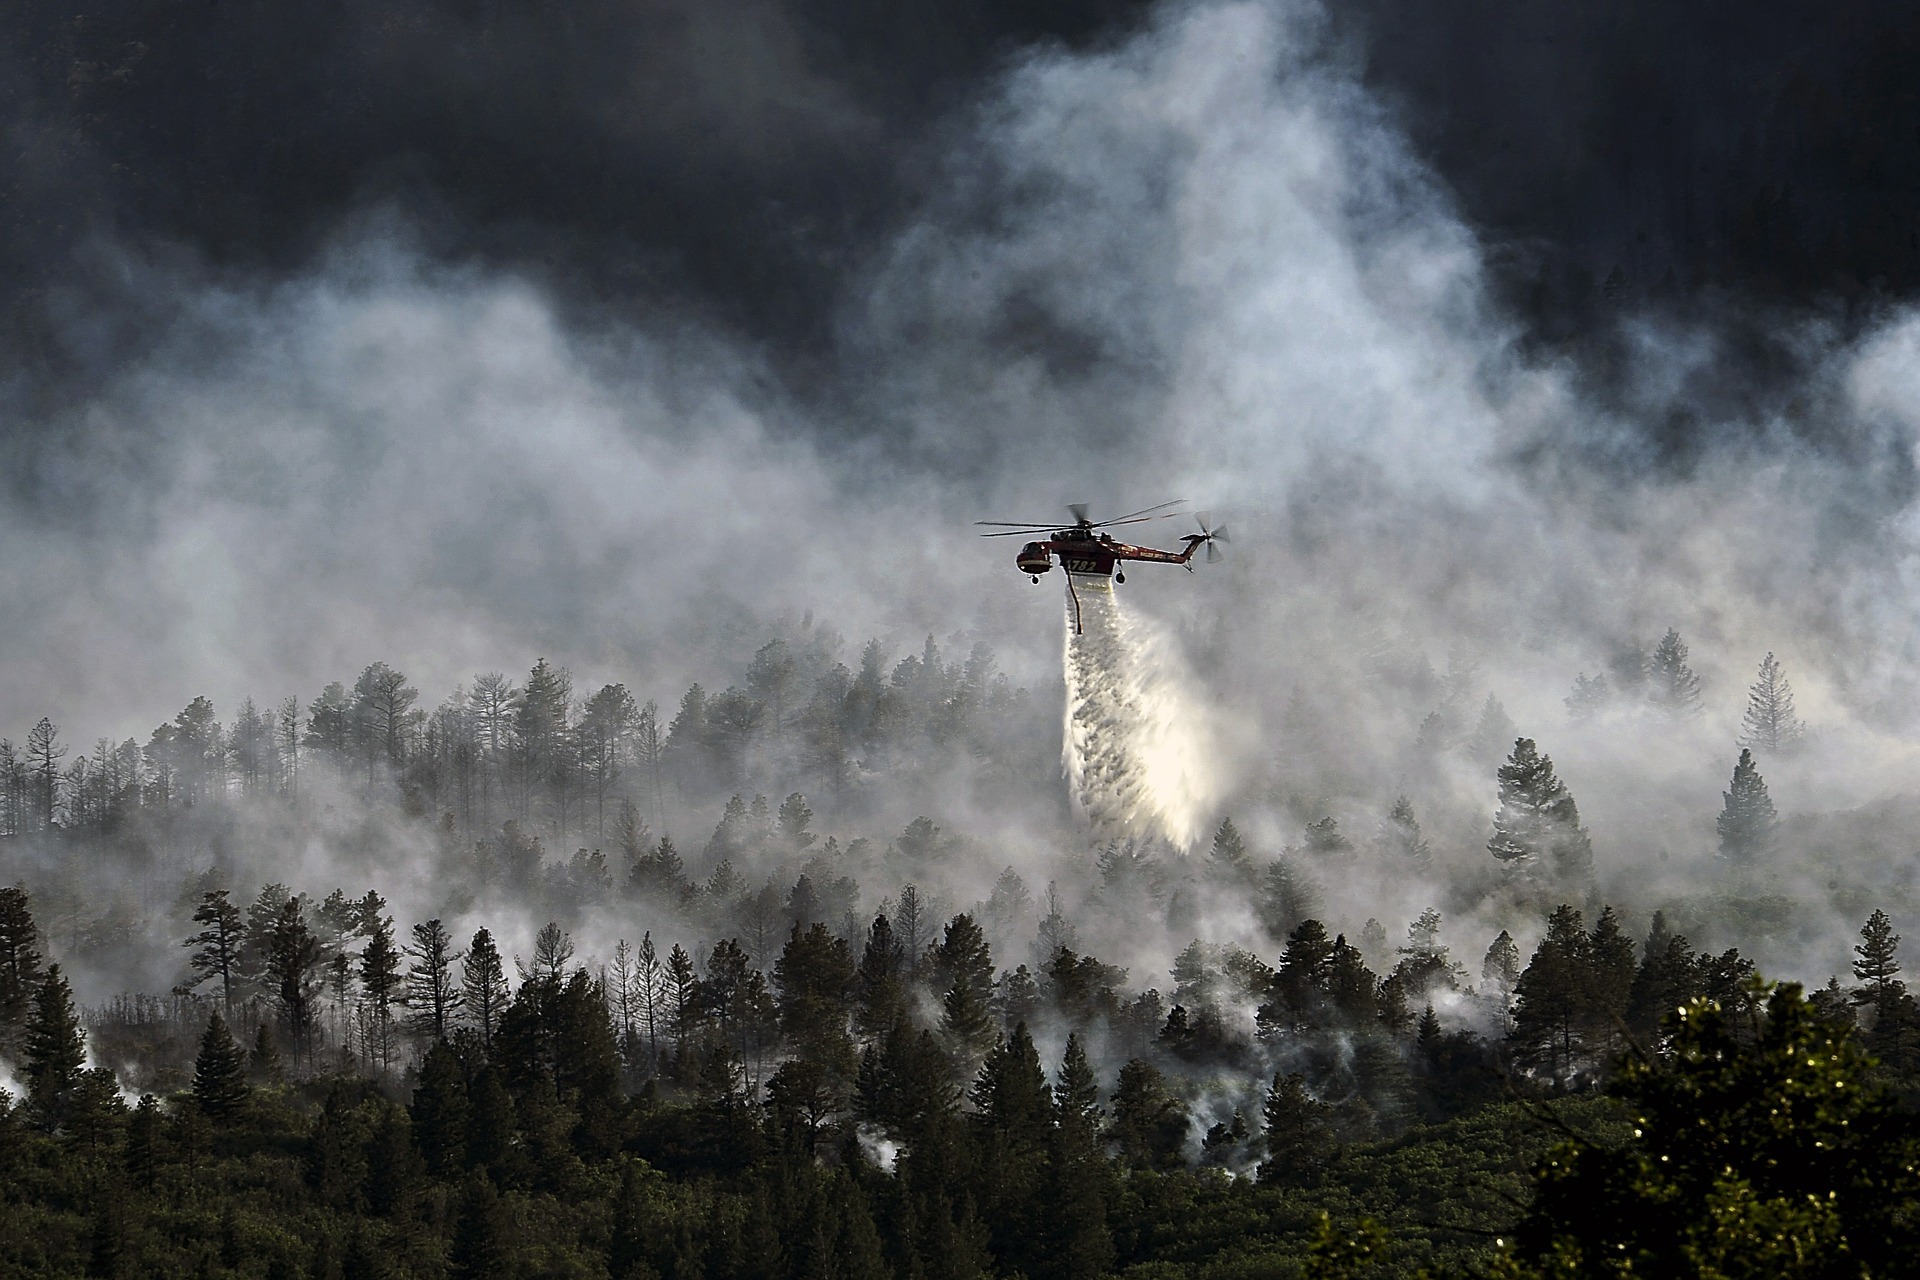 Extinguishing Amazon Rainforest Fire | अमेज़न वर्षावन की आग | Amazon Rainforest Fire in Hindi